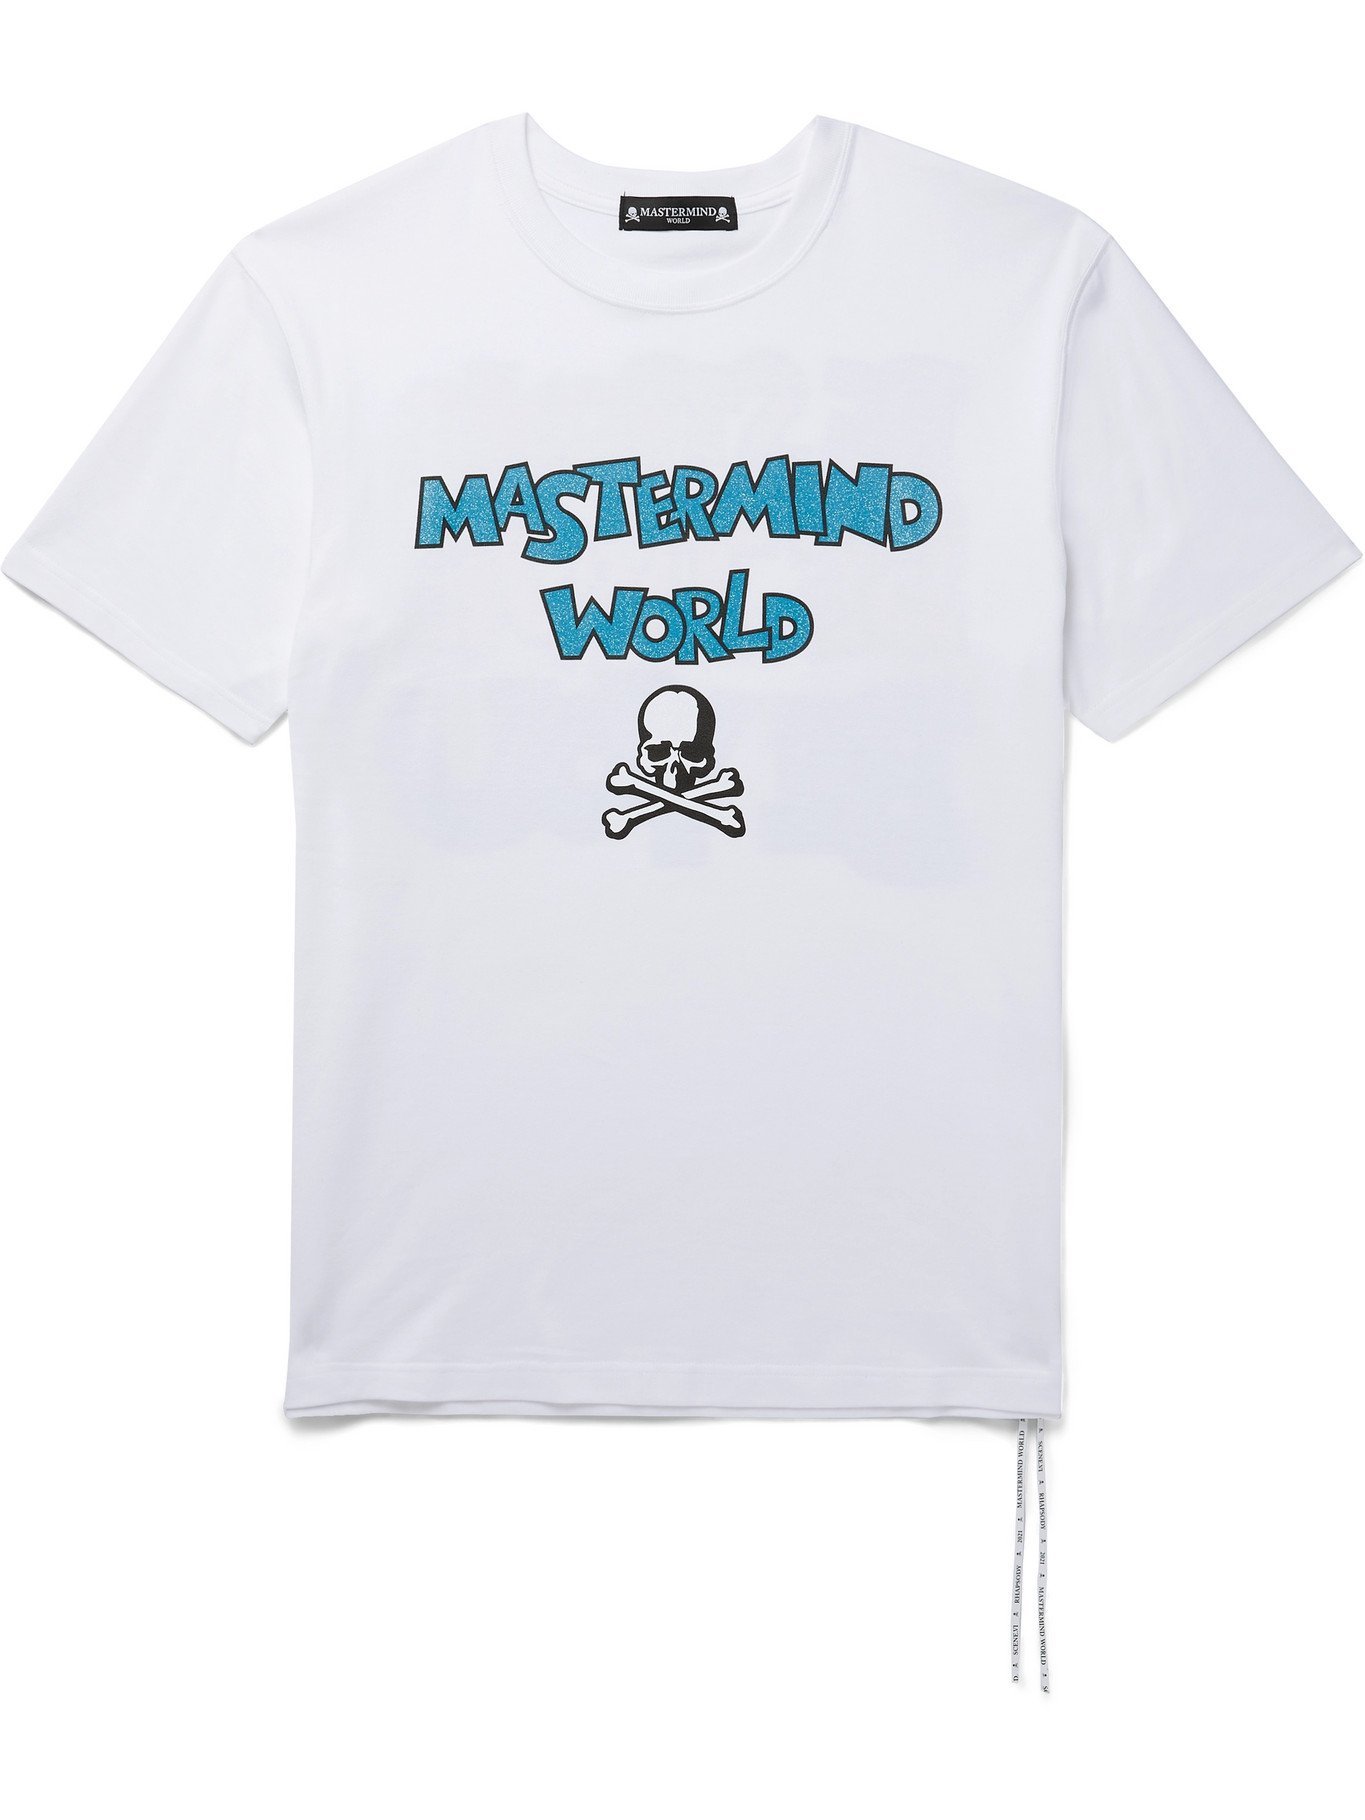 MASTERMIND WORLD - Printed Cotton-Jersey T-Shirt - White MASTERMIND WORLD